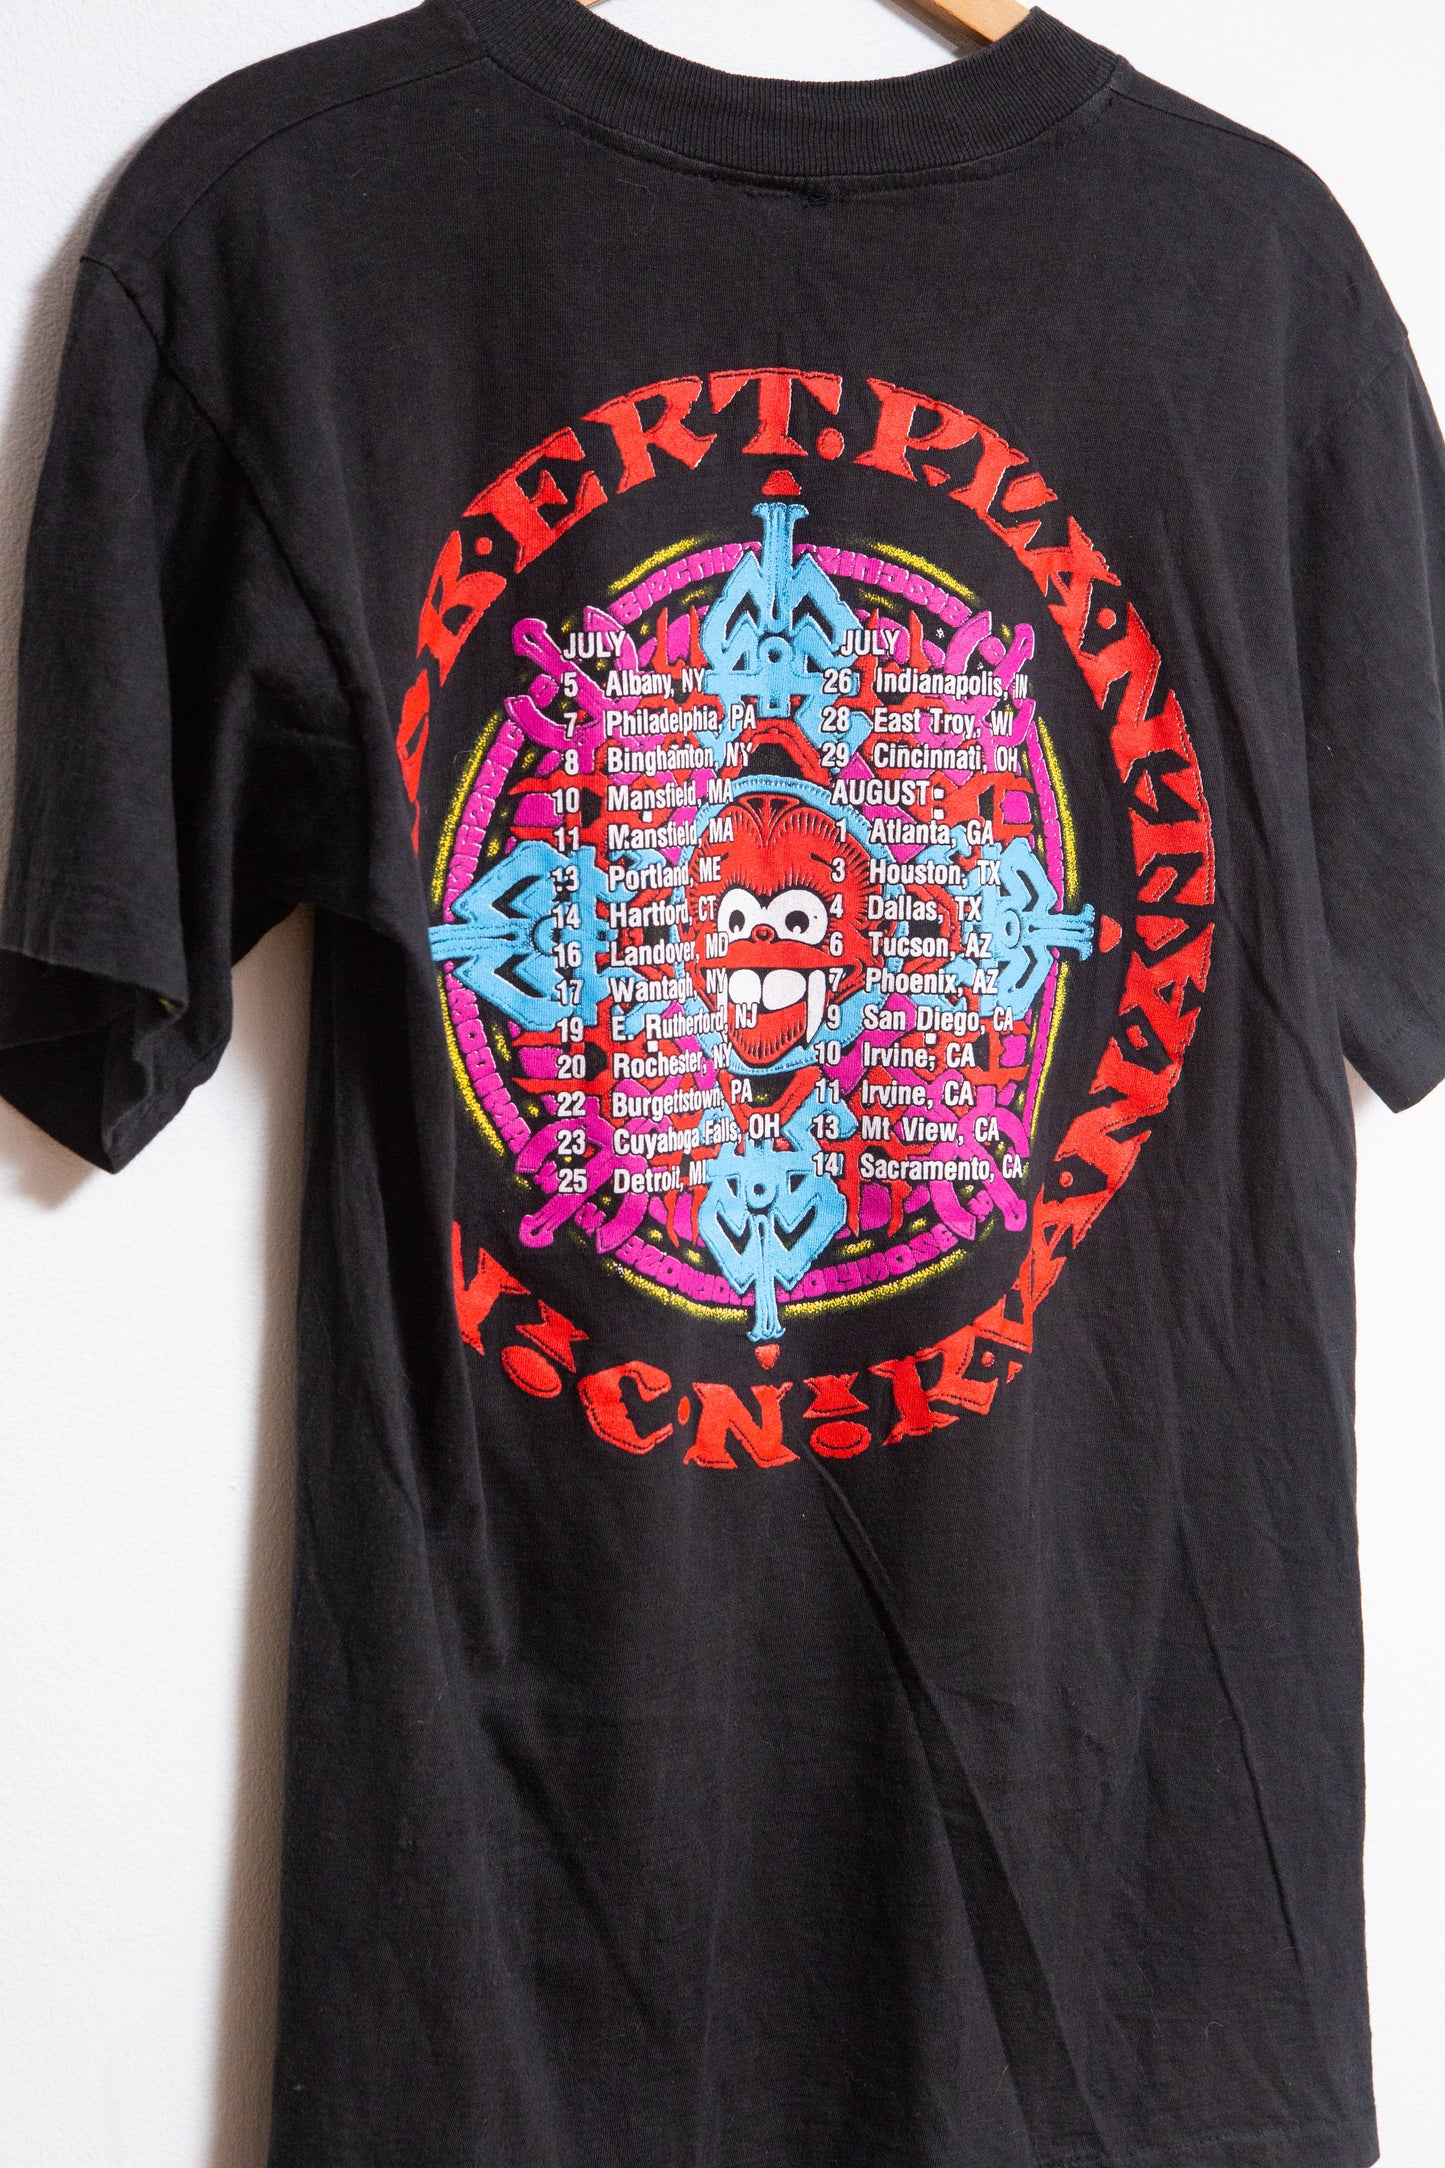 Vintage 1990 Robert Plant Nirvana Tour T-shirt Size M